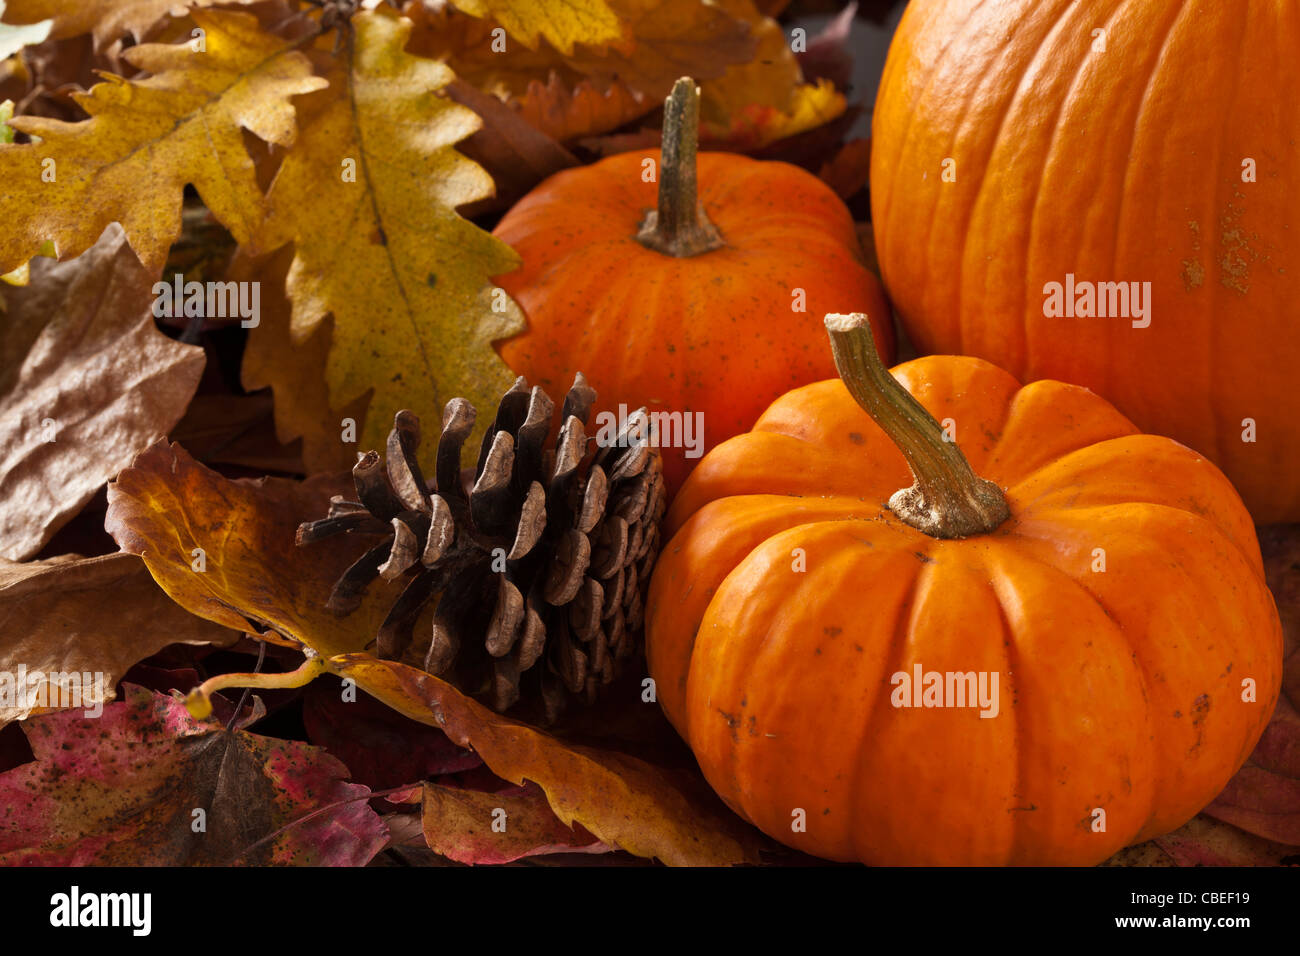 Autumn scene with pumpkins Stock Photo